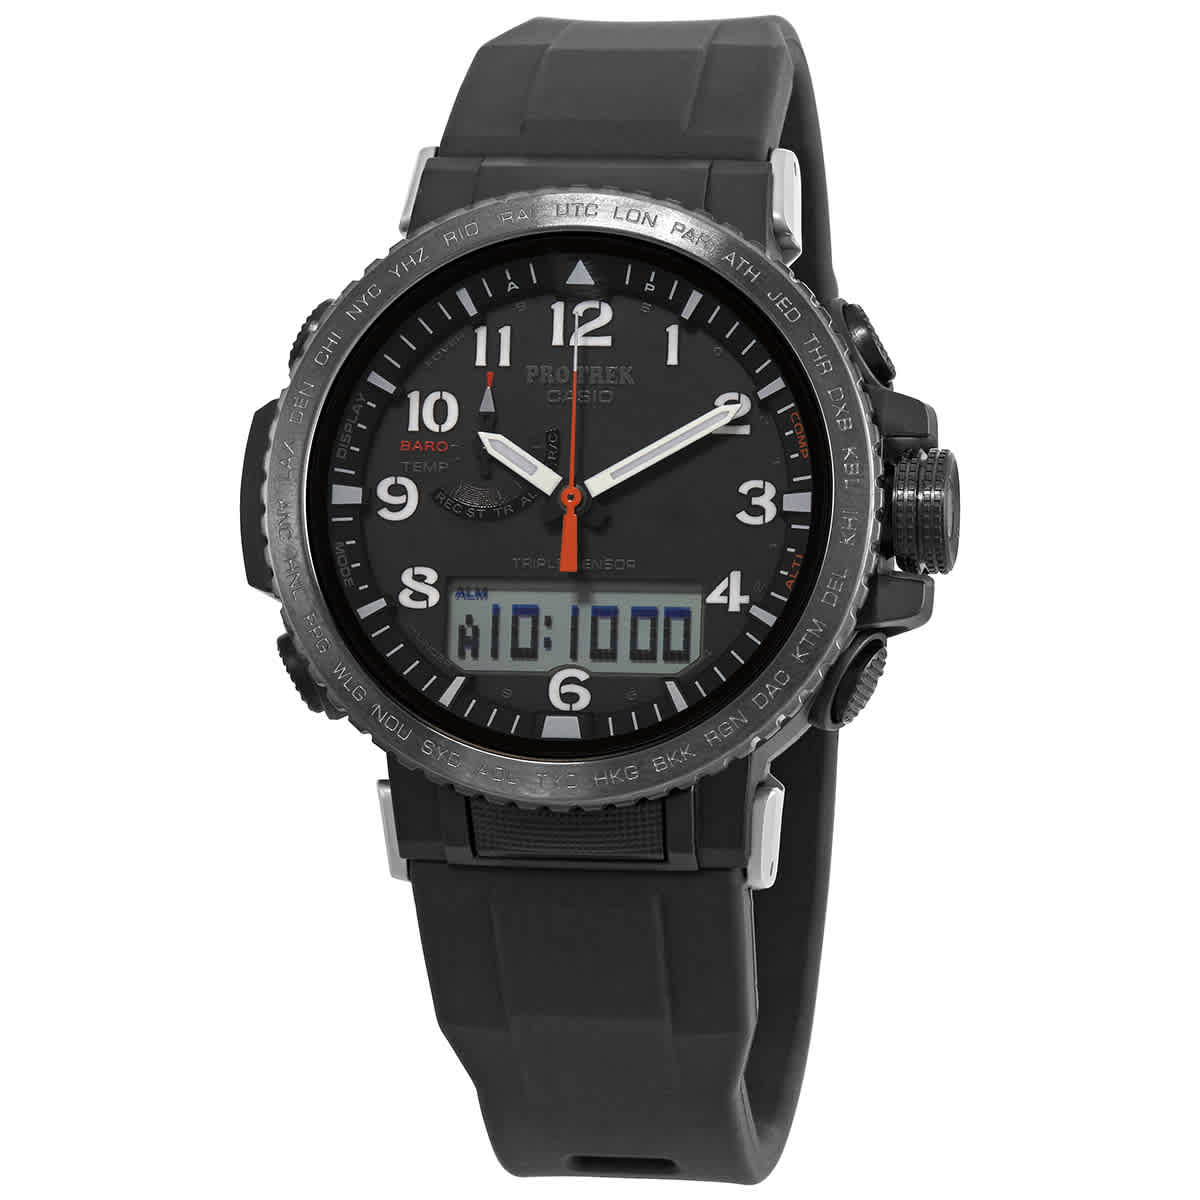 Casio Pro Trek Alarm World Time Analog Digital Men S Watch Prw 50y 1adr Ebay